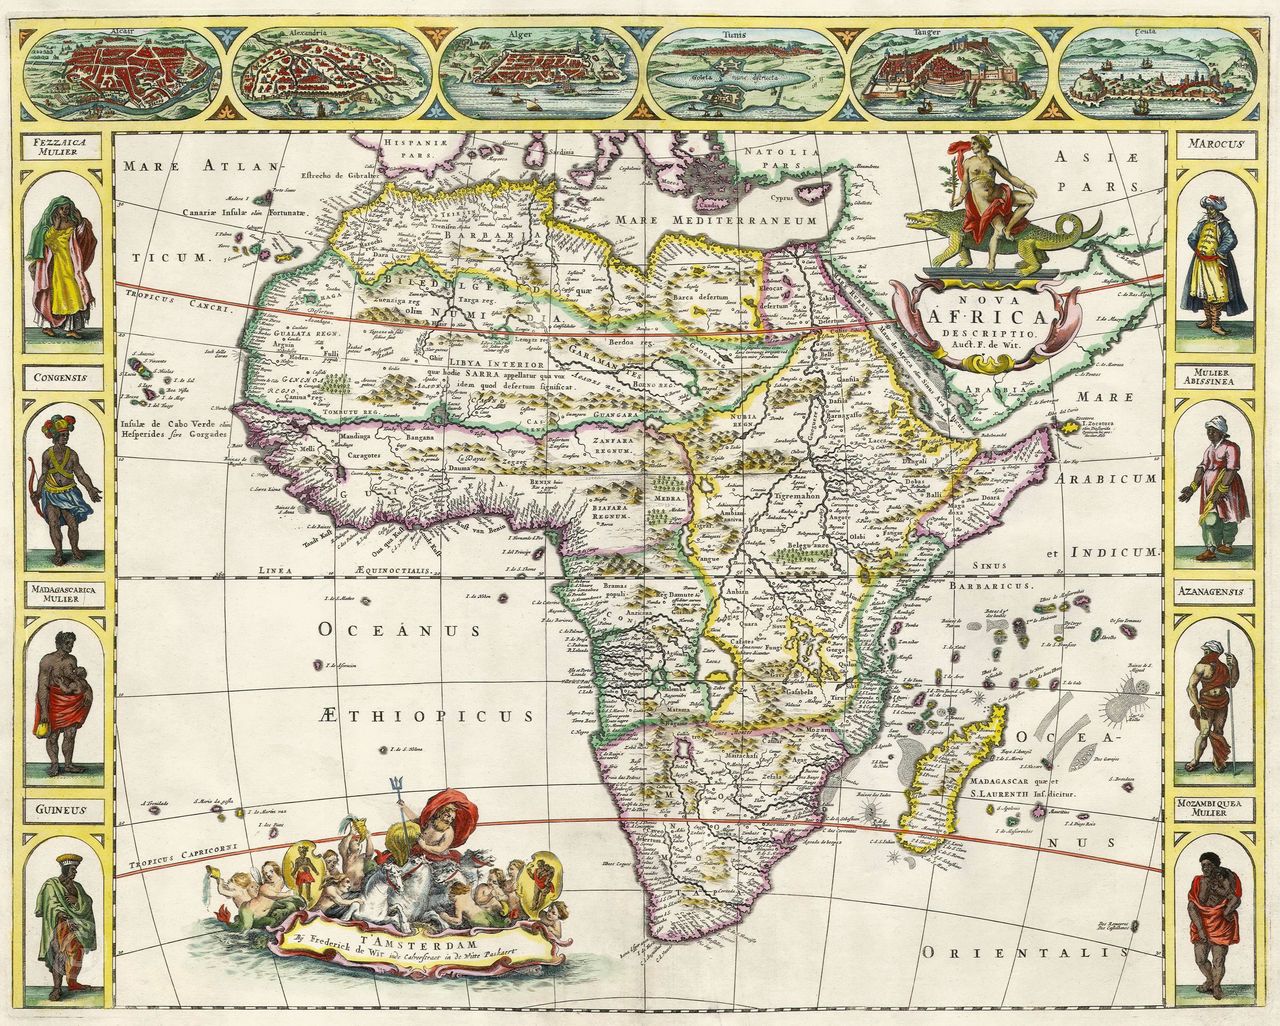 Фредерик де Вит. Карта Африки. 1660-1670